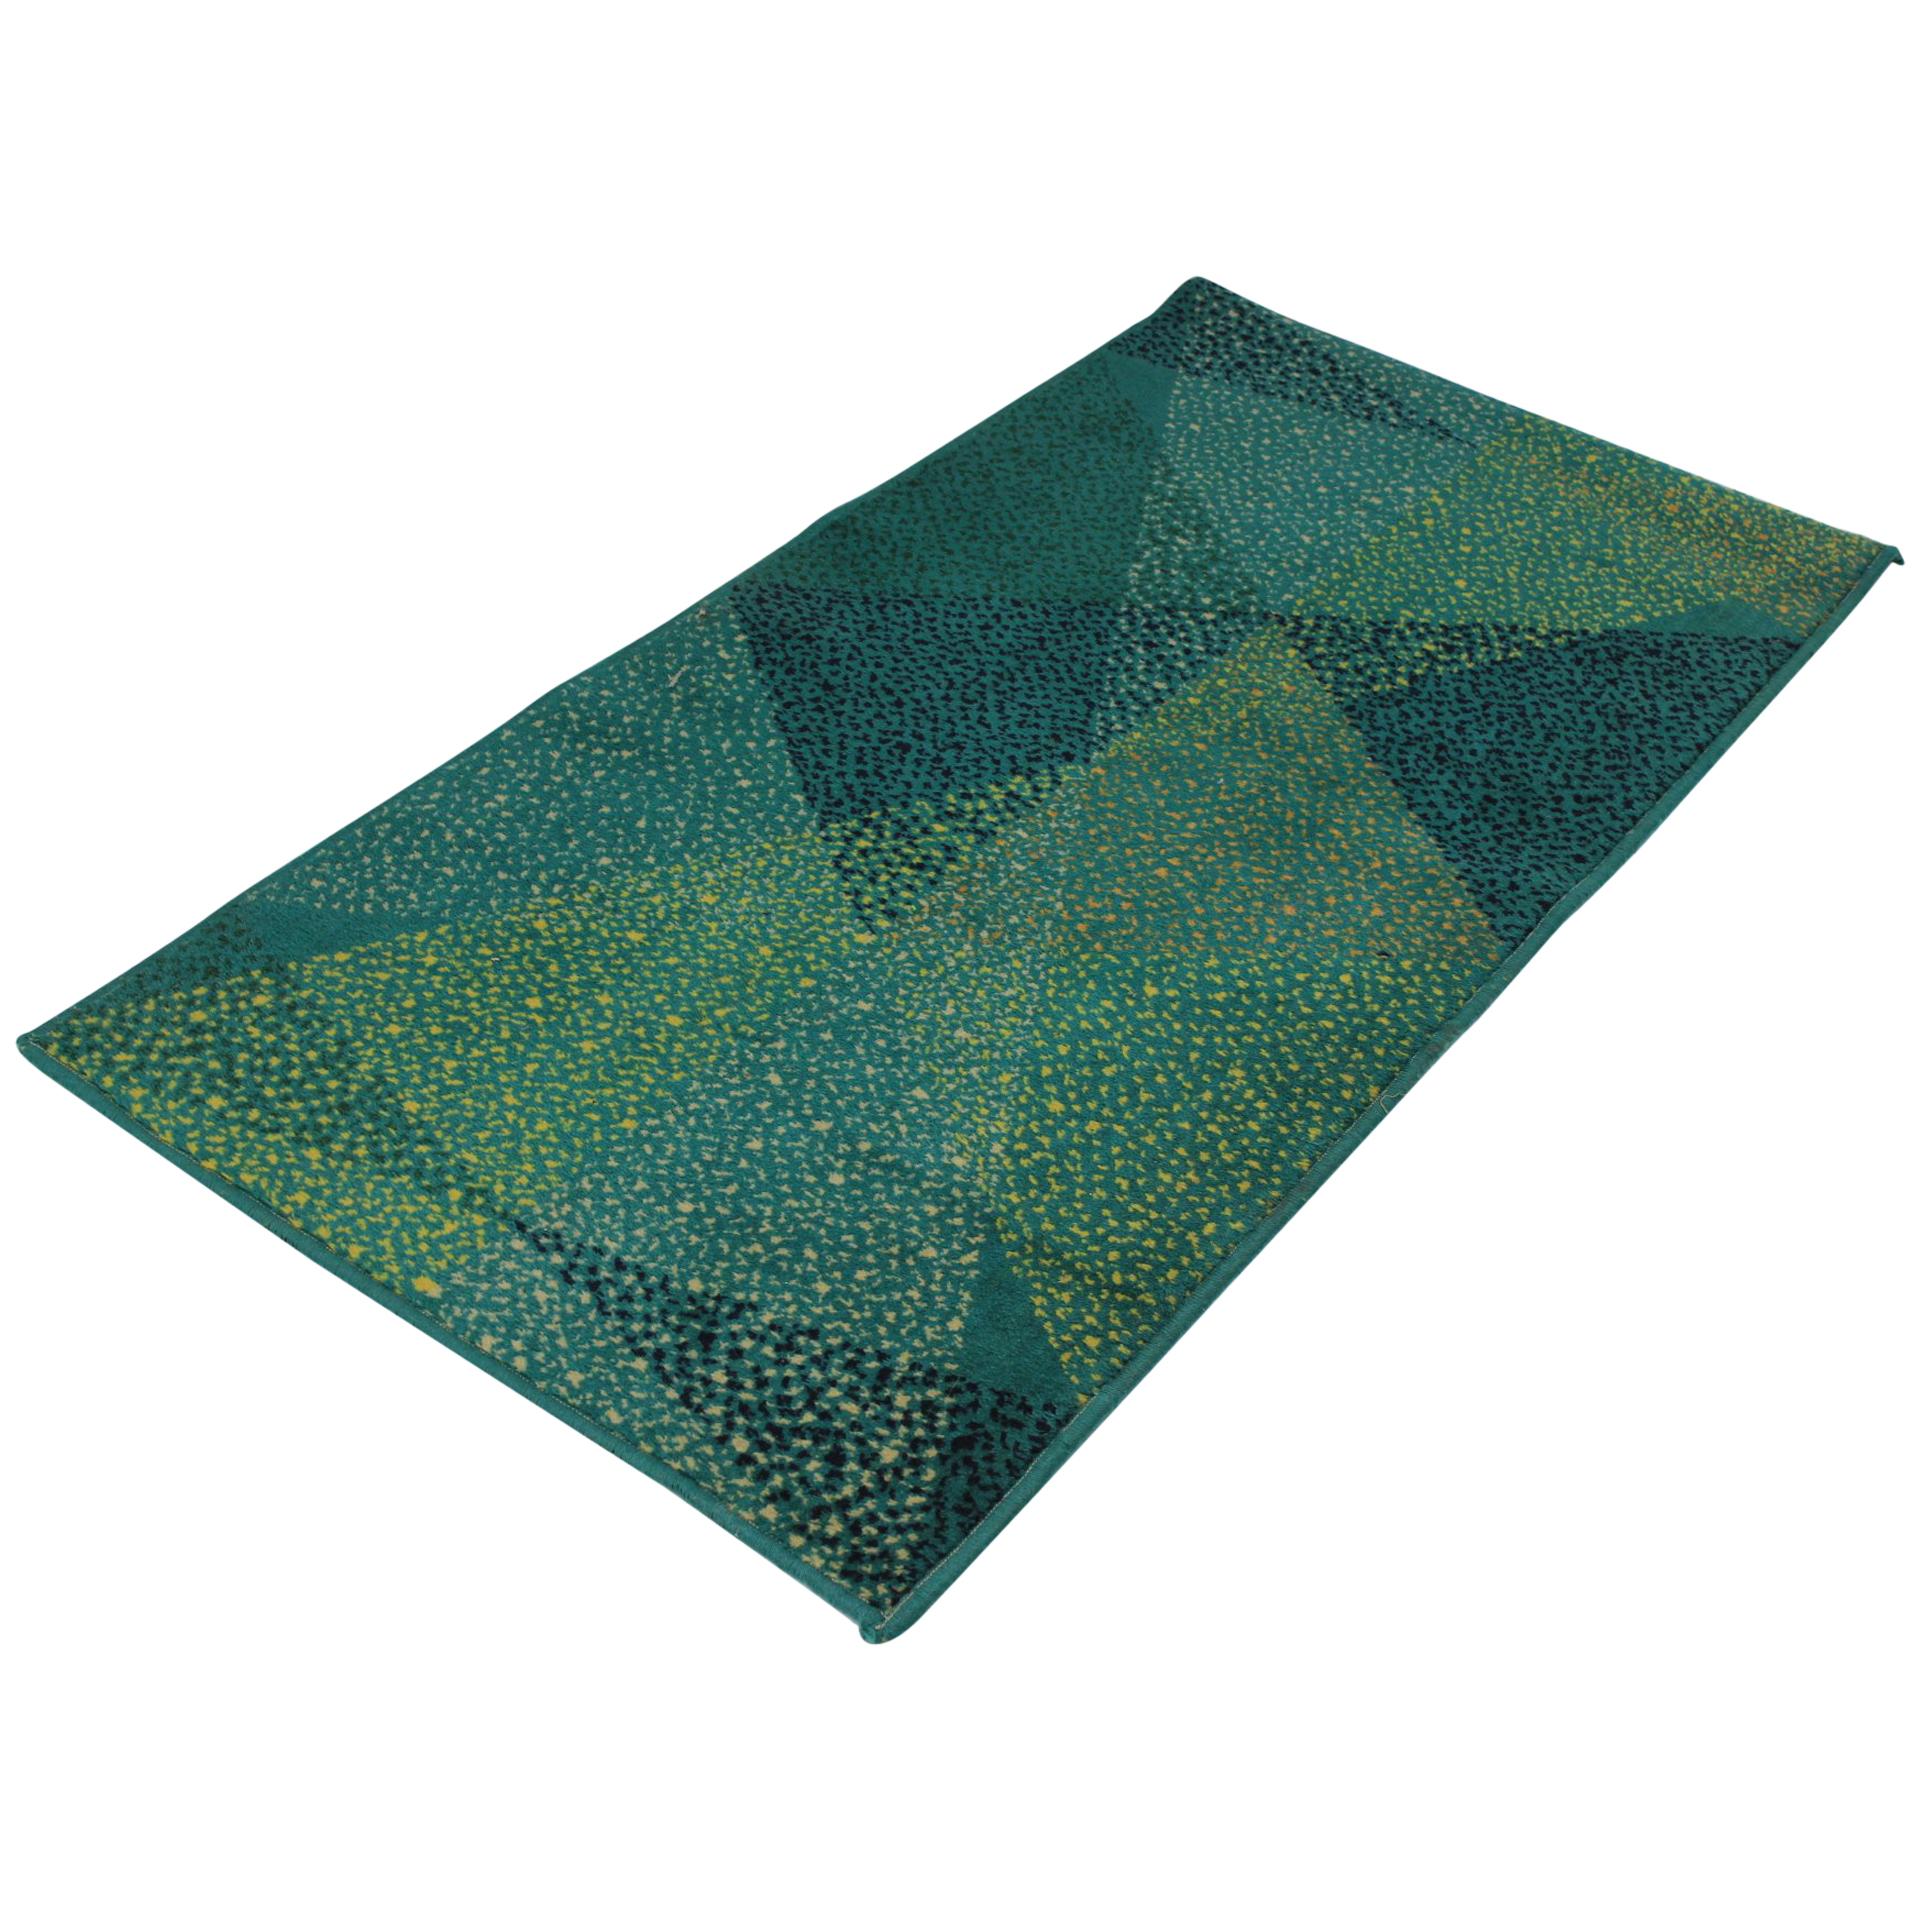 Small Geometric Green Carpet or Rug, 1970s